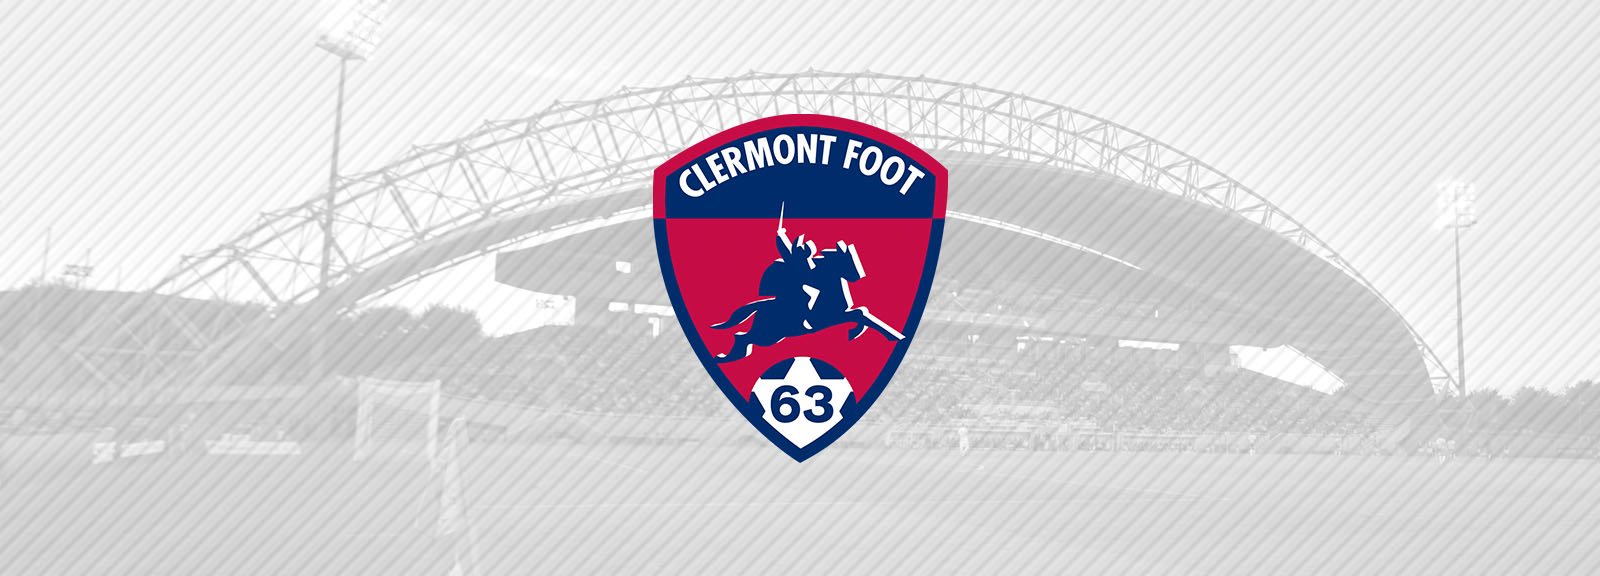 Comunicado de prensa Clermont Foot 63 – Clermont Foot